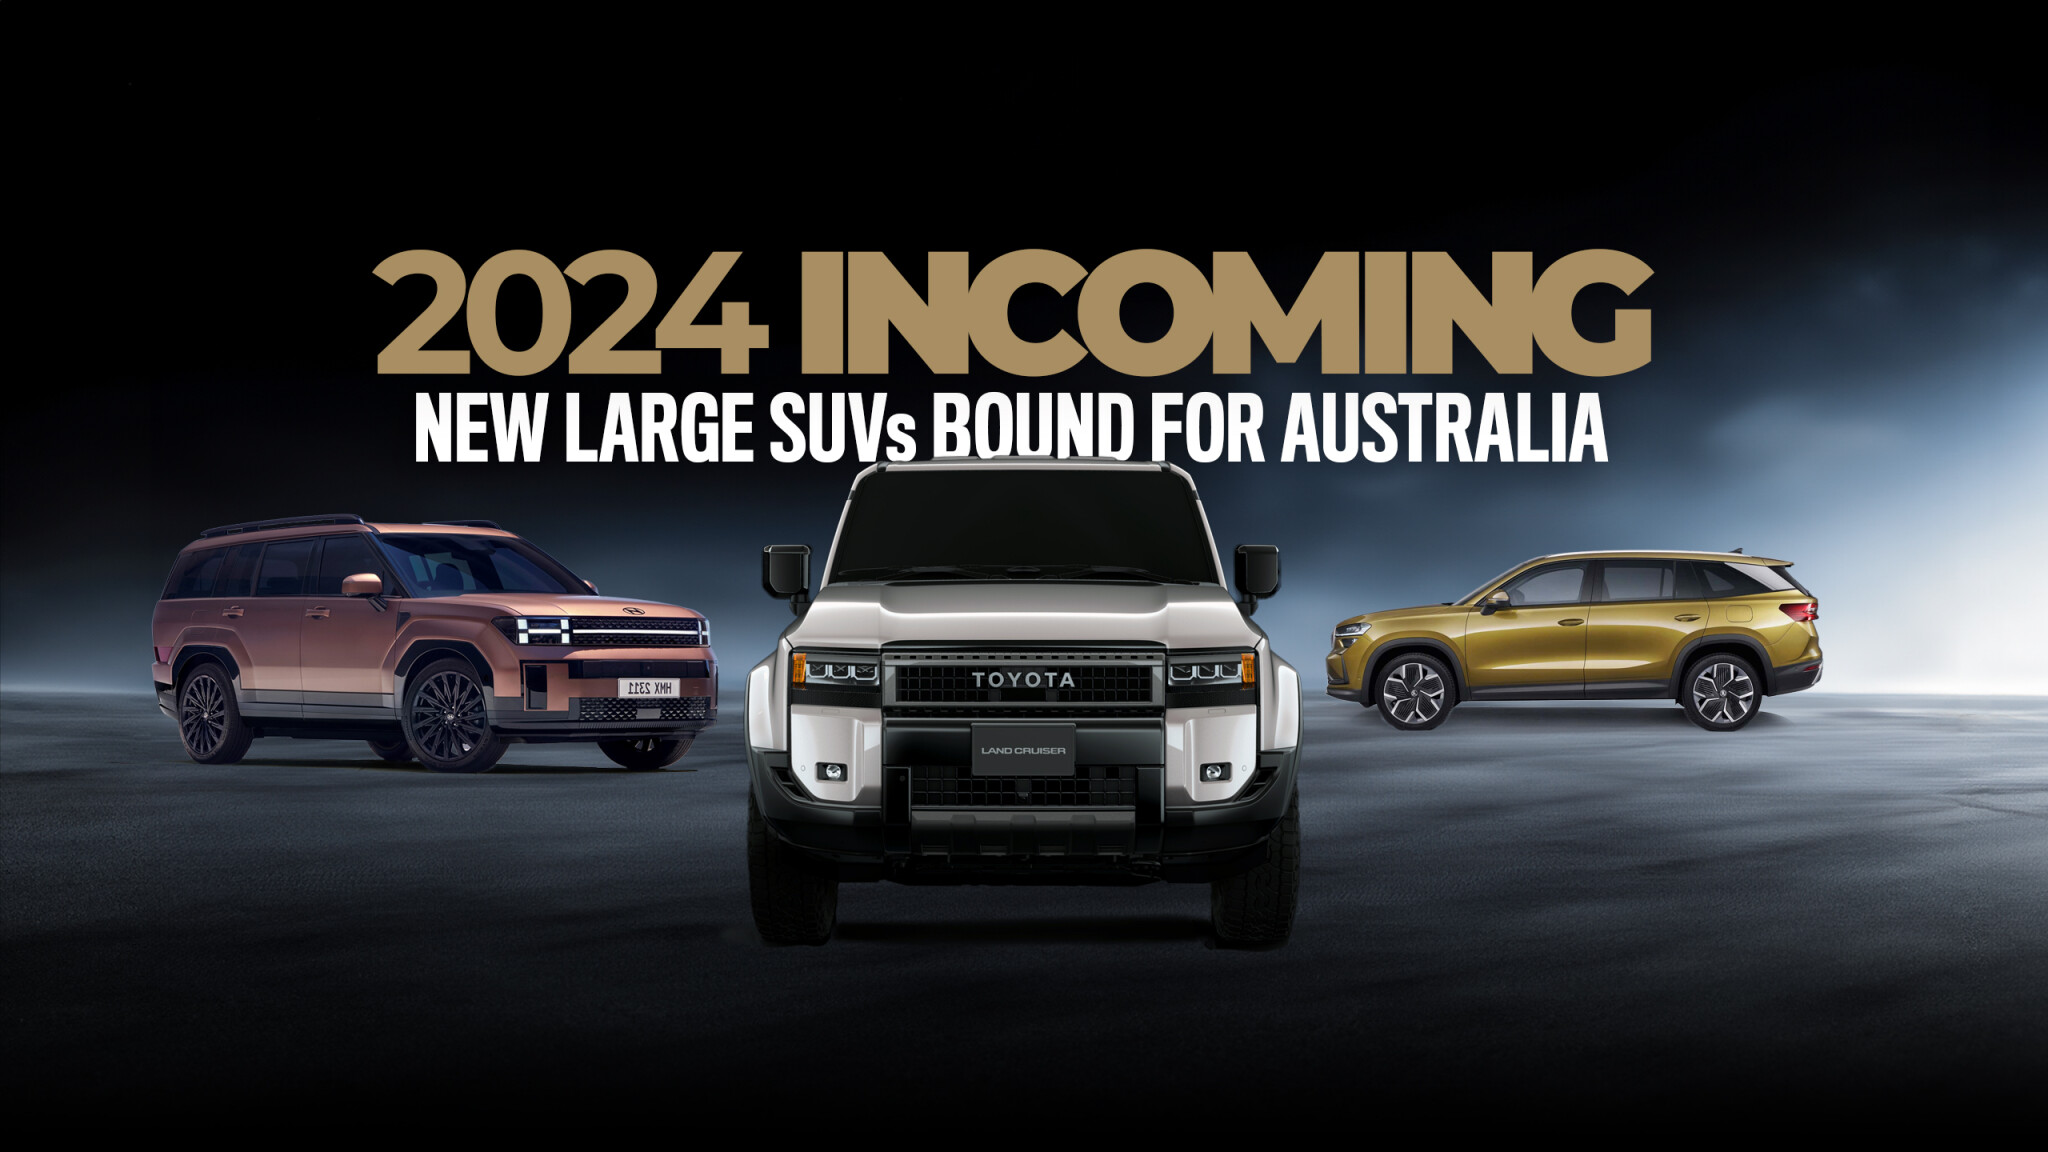 Australia's New large SUVs for 2024